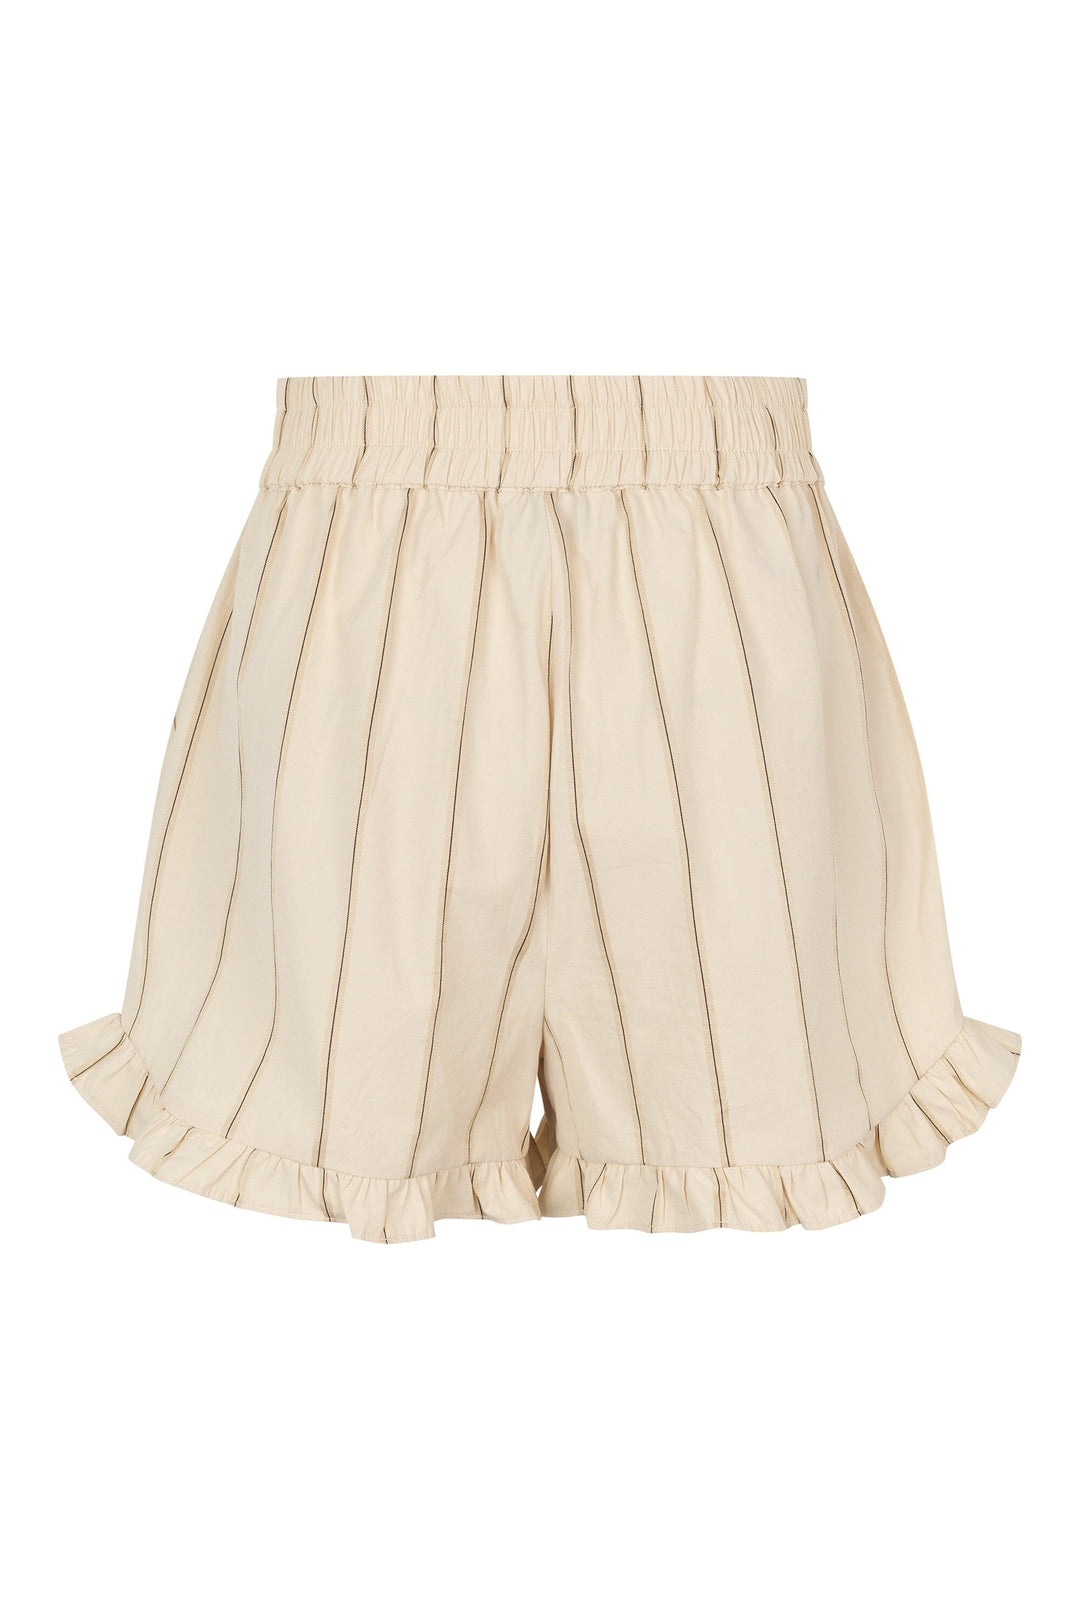 A-View - Lizza Shorts - 139 Off White/Black Stripe Shorts 